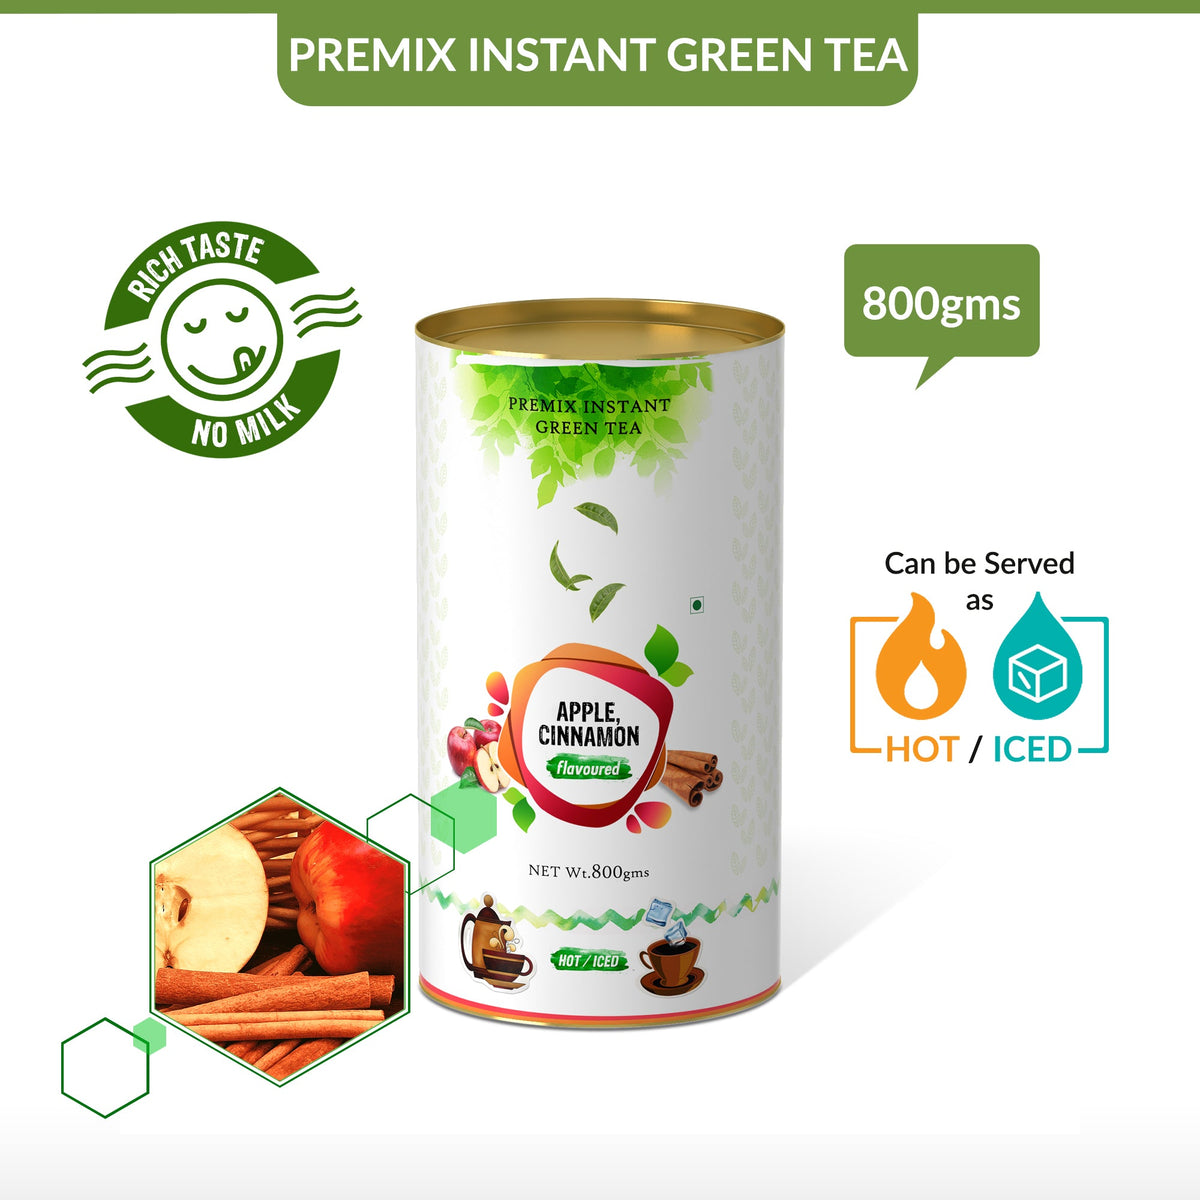 Apple Cinnamon Flavored Instant Green Tea